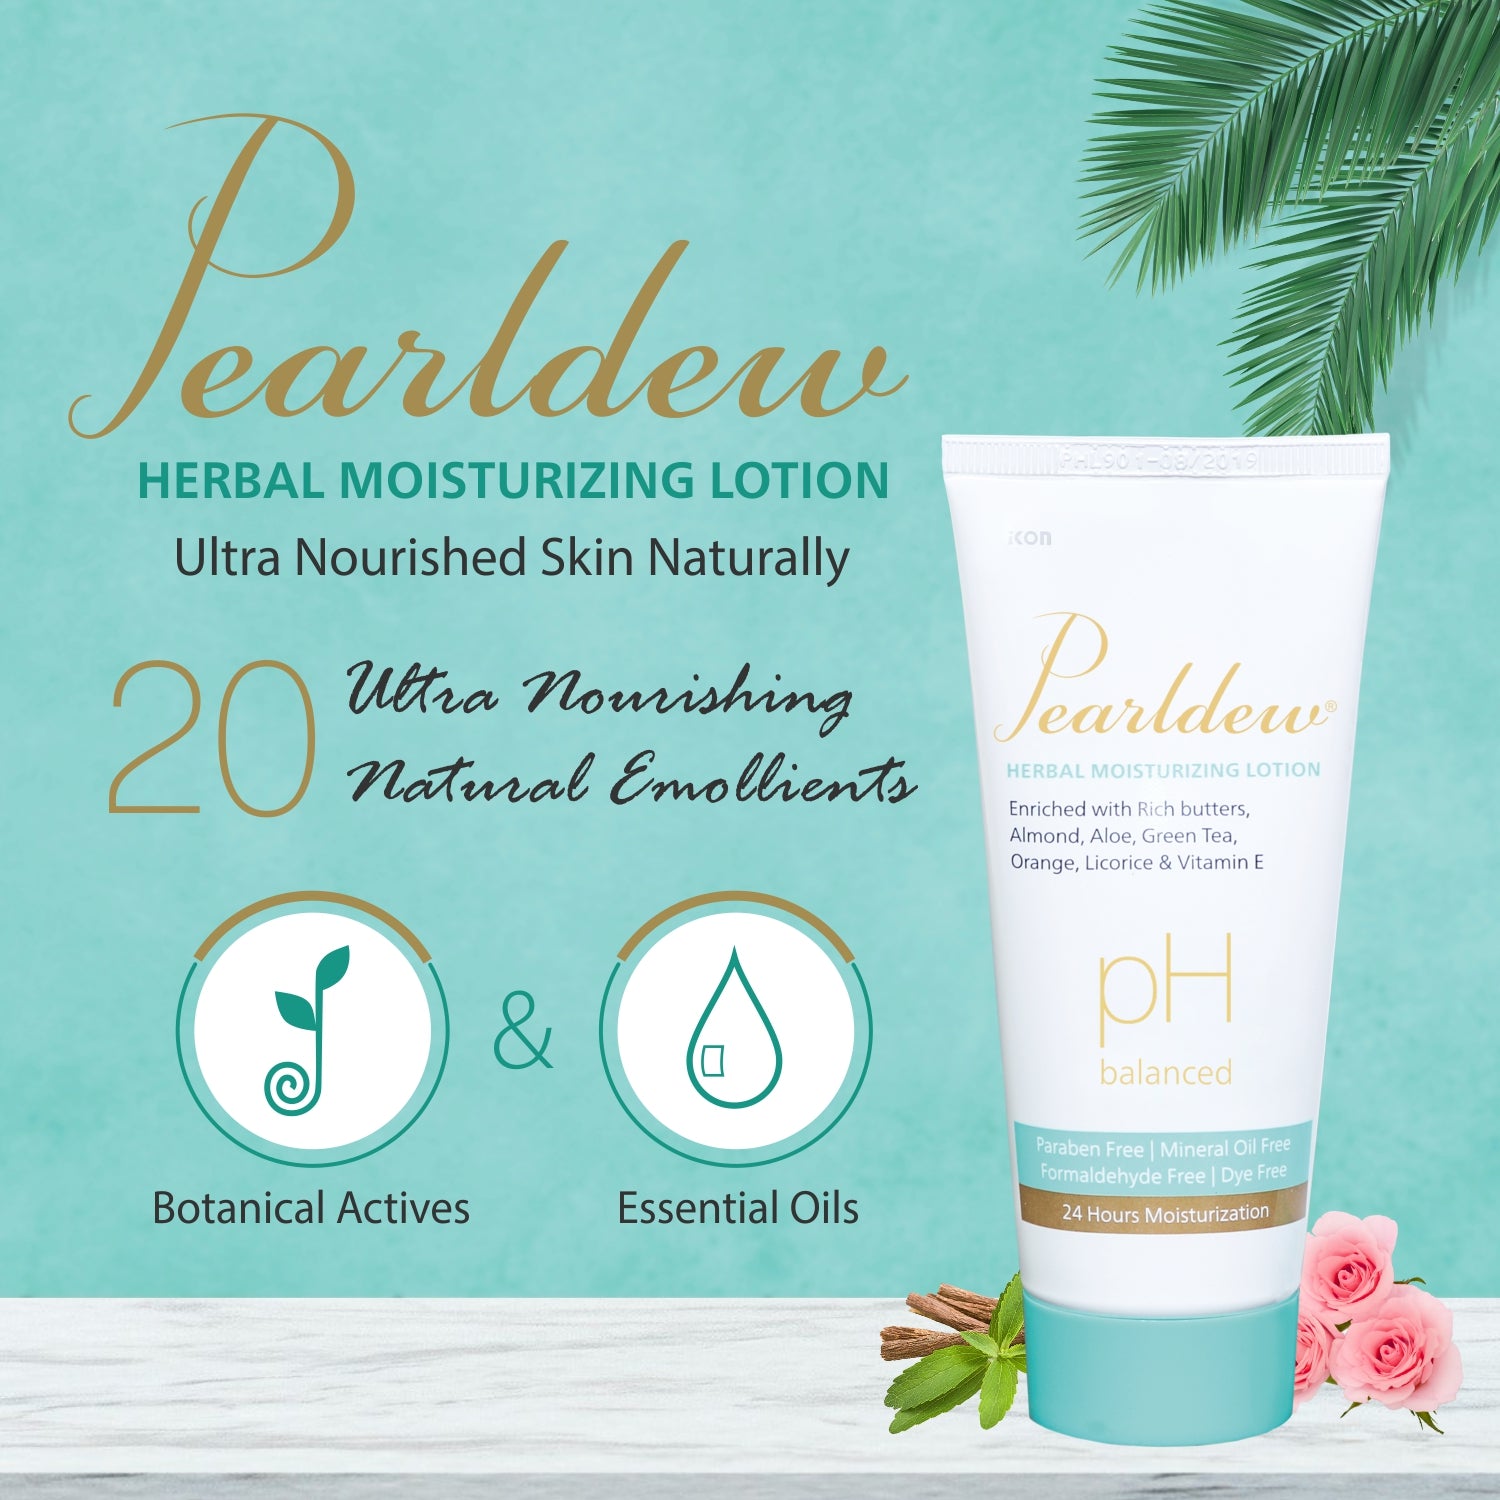 Pearldew Herbal Moisturizing Lotion (100 gm)